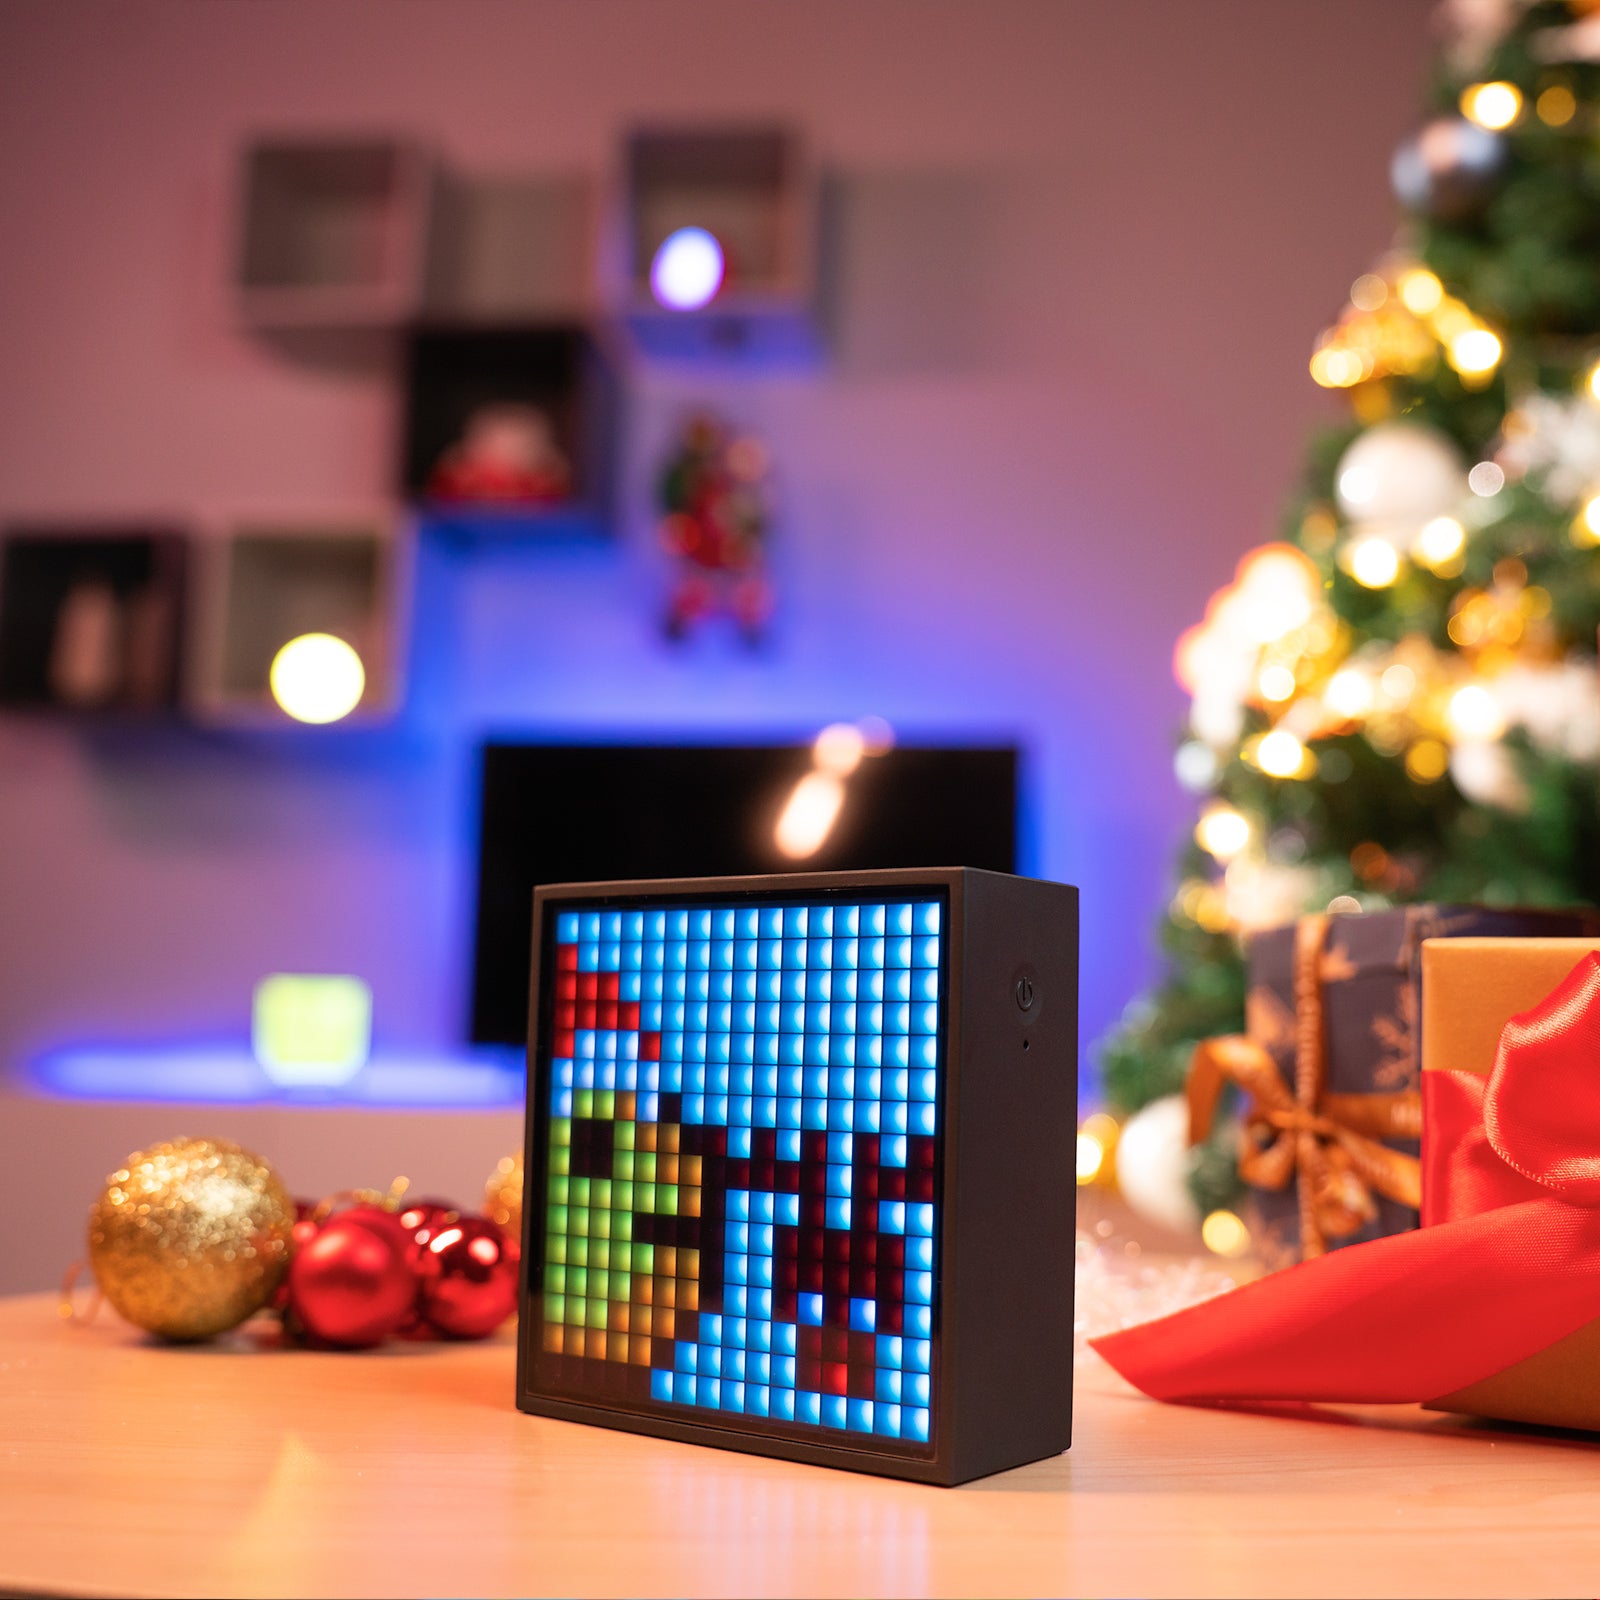 Divoom Timebox-Evo Pixel Art Enceinte 16x16 DIY LED Affichage Réveil Boîte